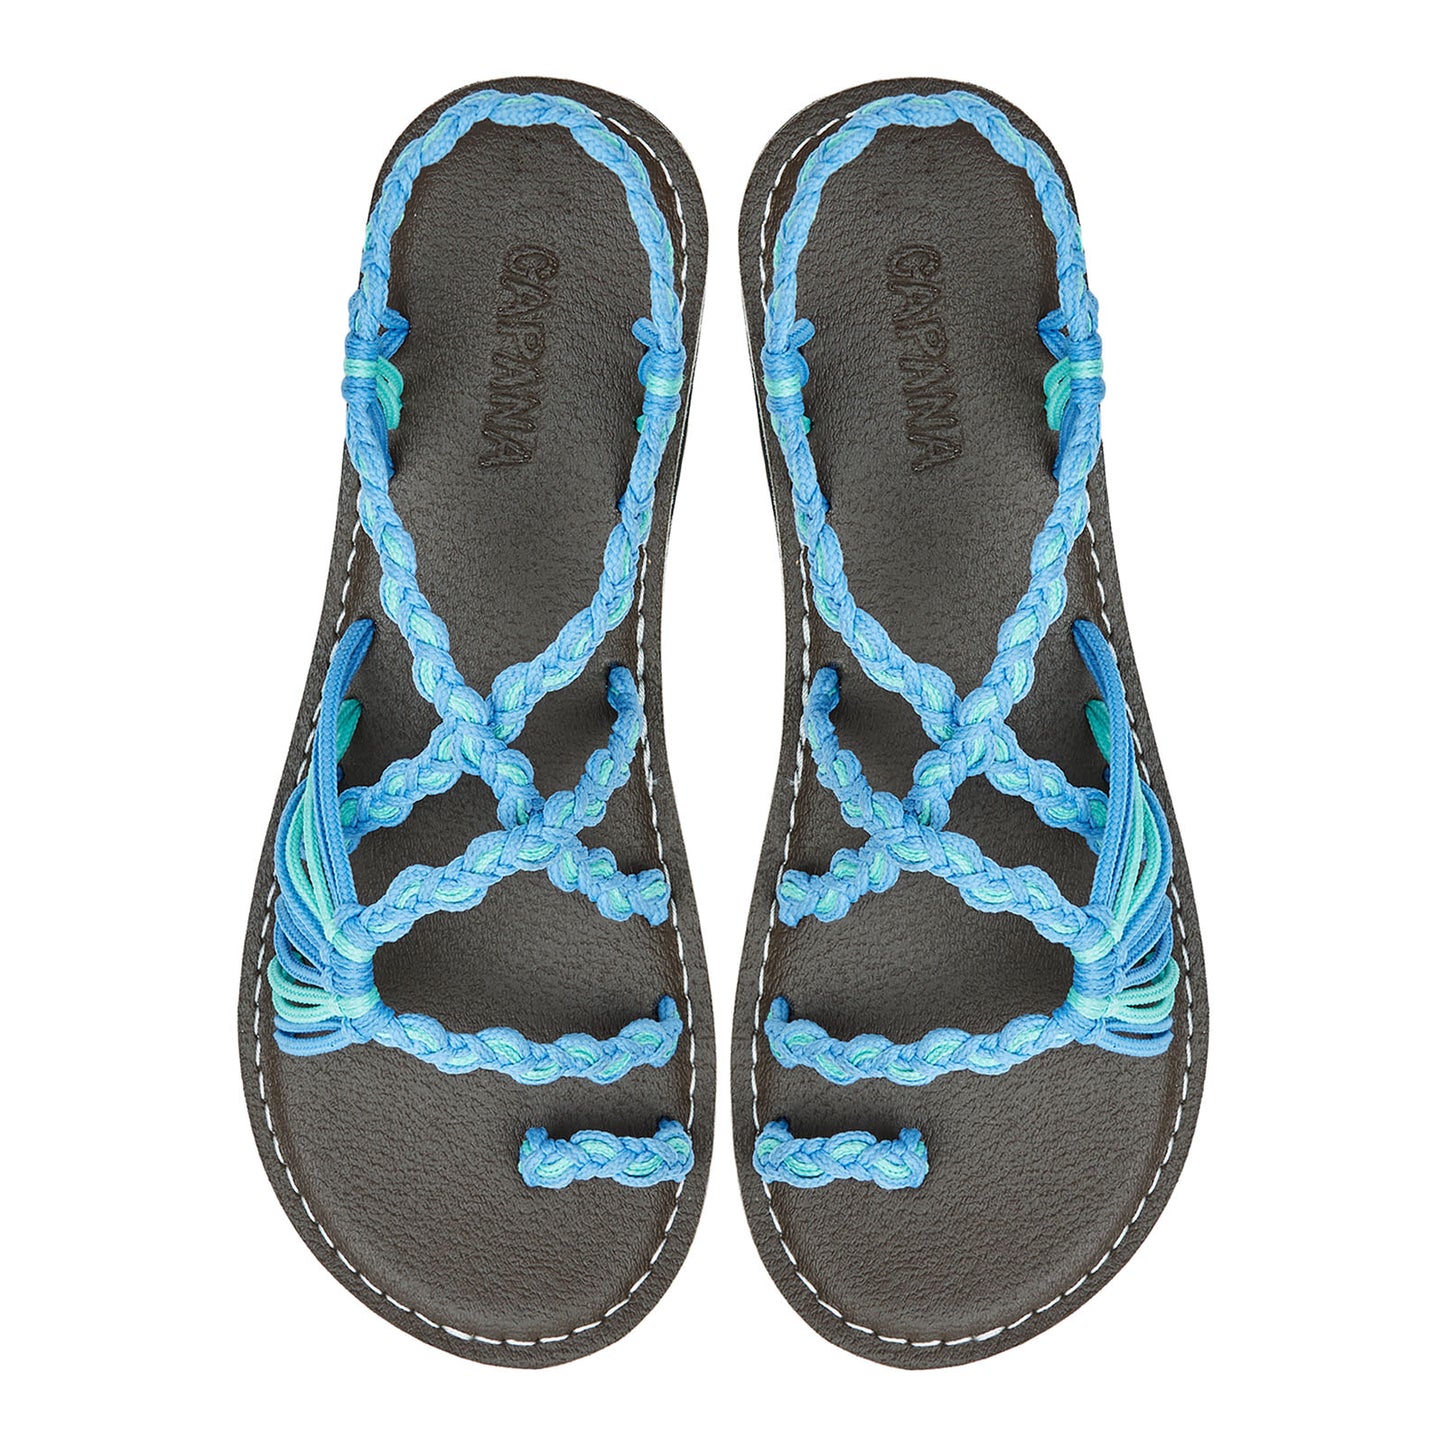 Commune Turquoise Sky Blue Wavy Rope Sandals Mint Blue loop design Flat sandals for women